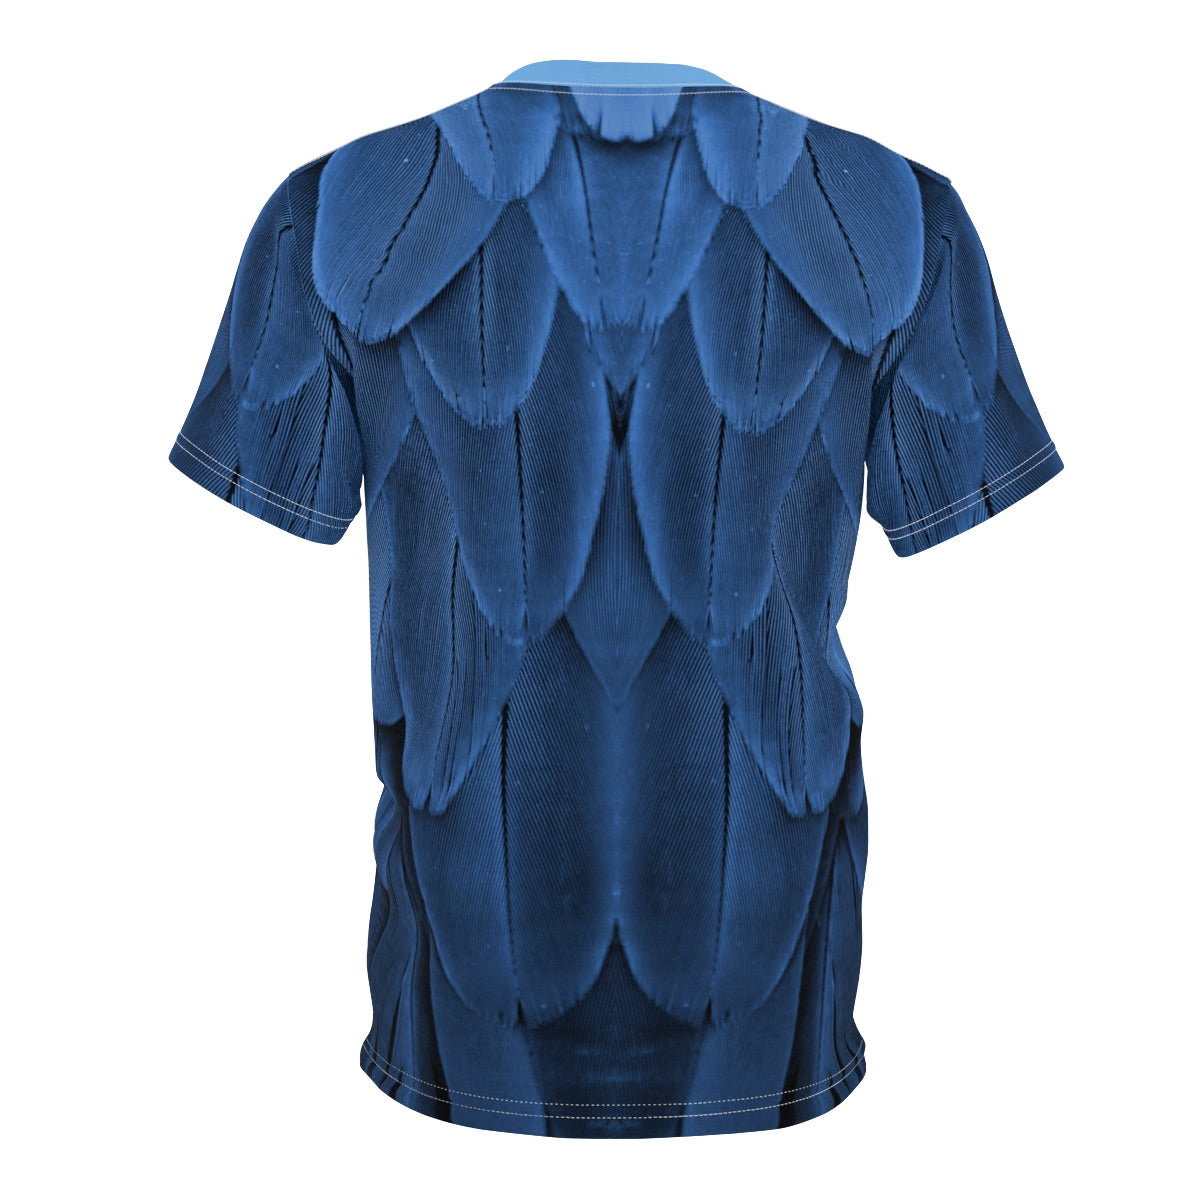 Blue Feather Shirt